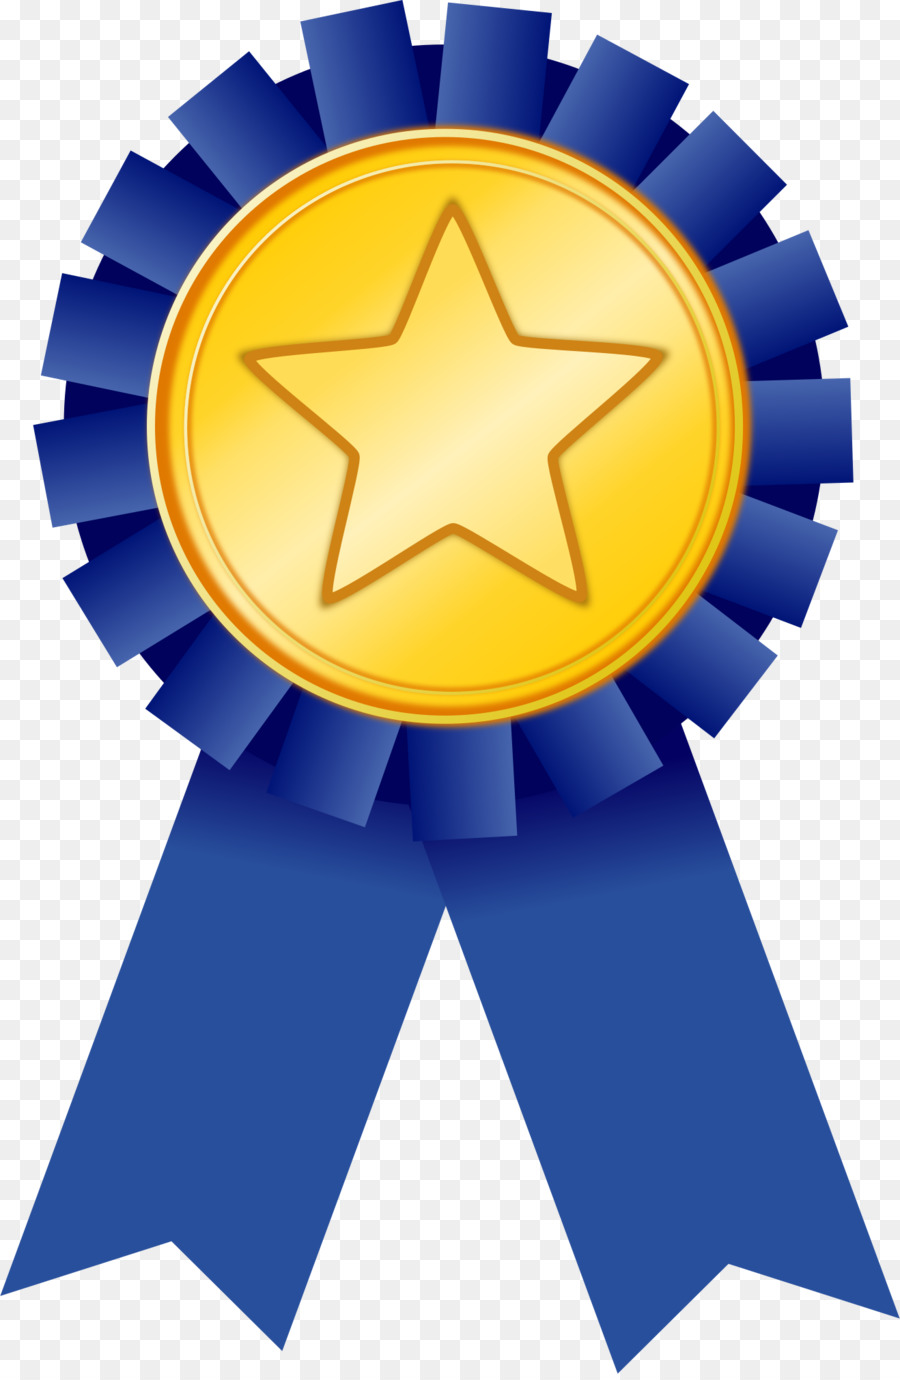 Ribbon Award-clipart - ziemlich gold Medaille